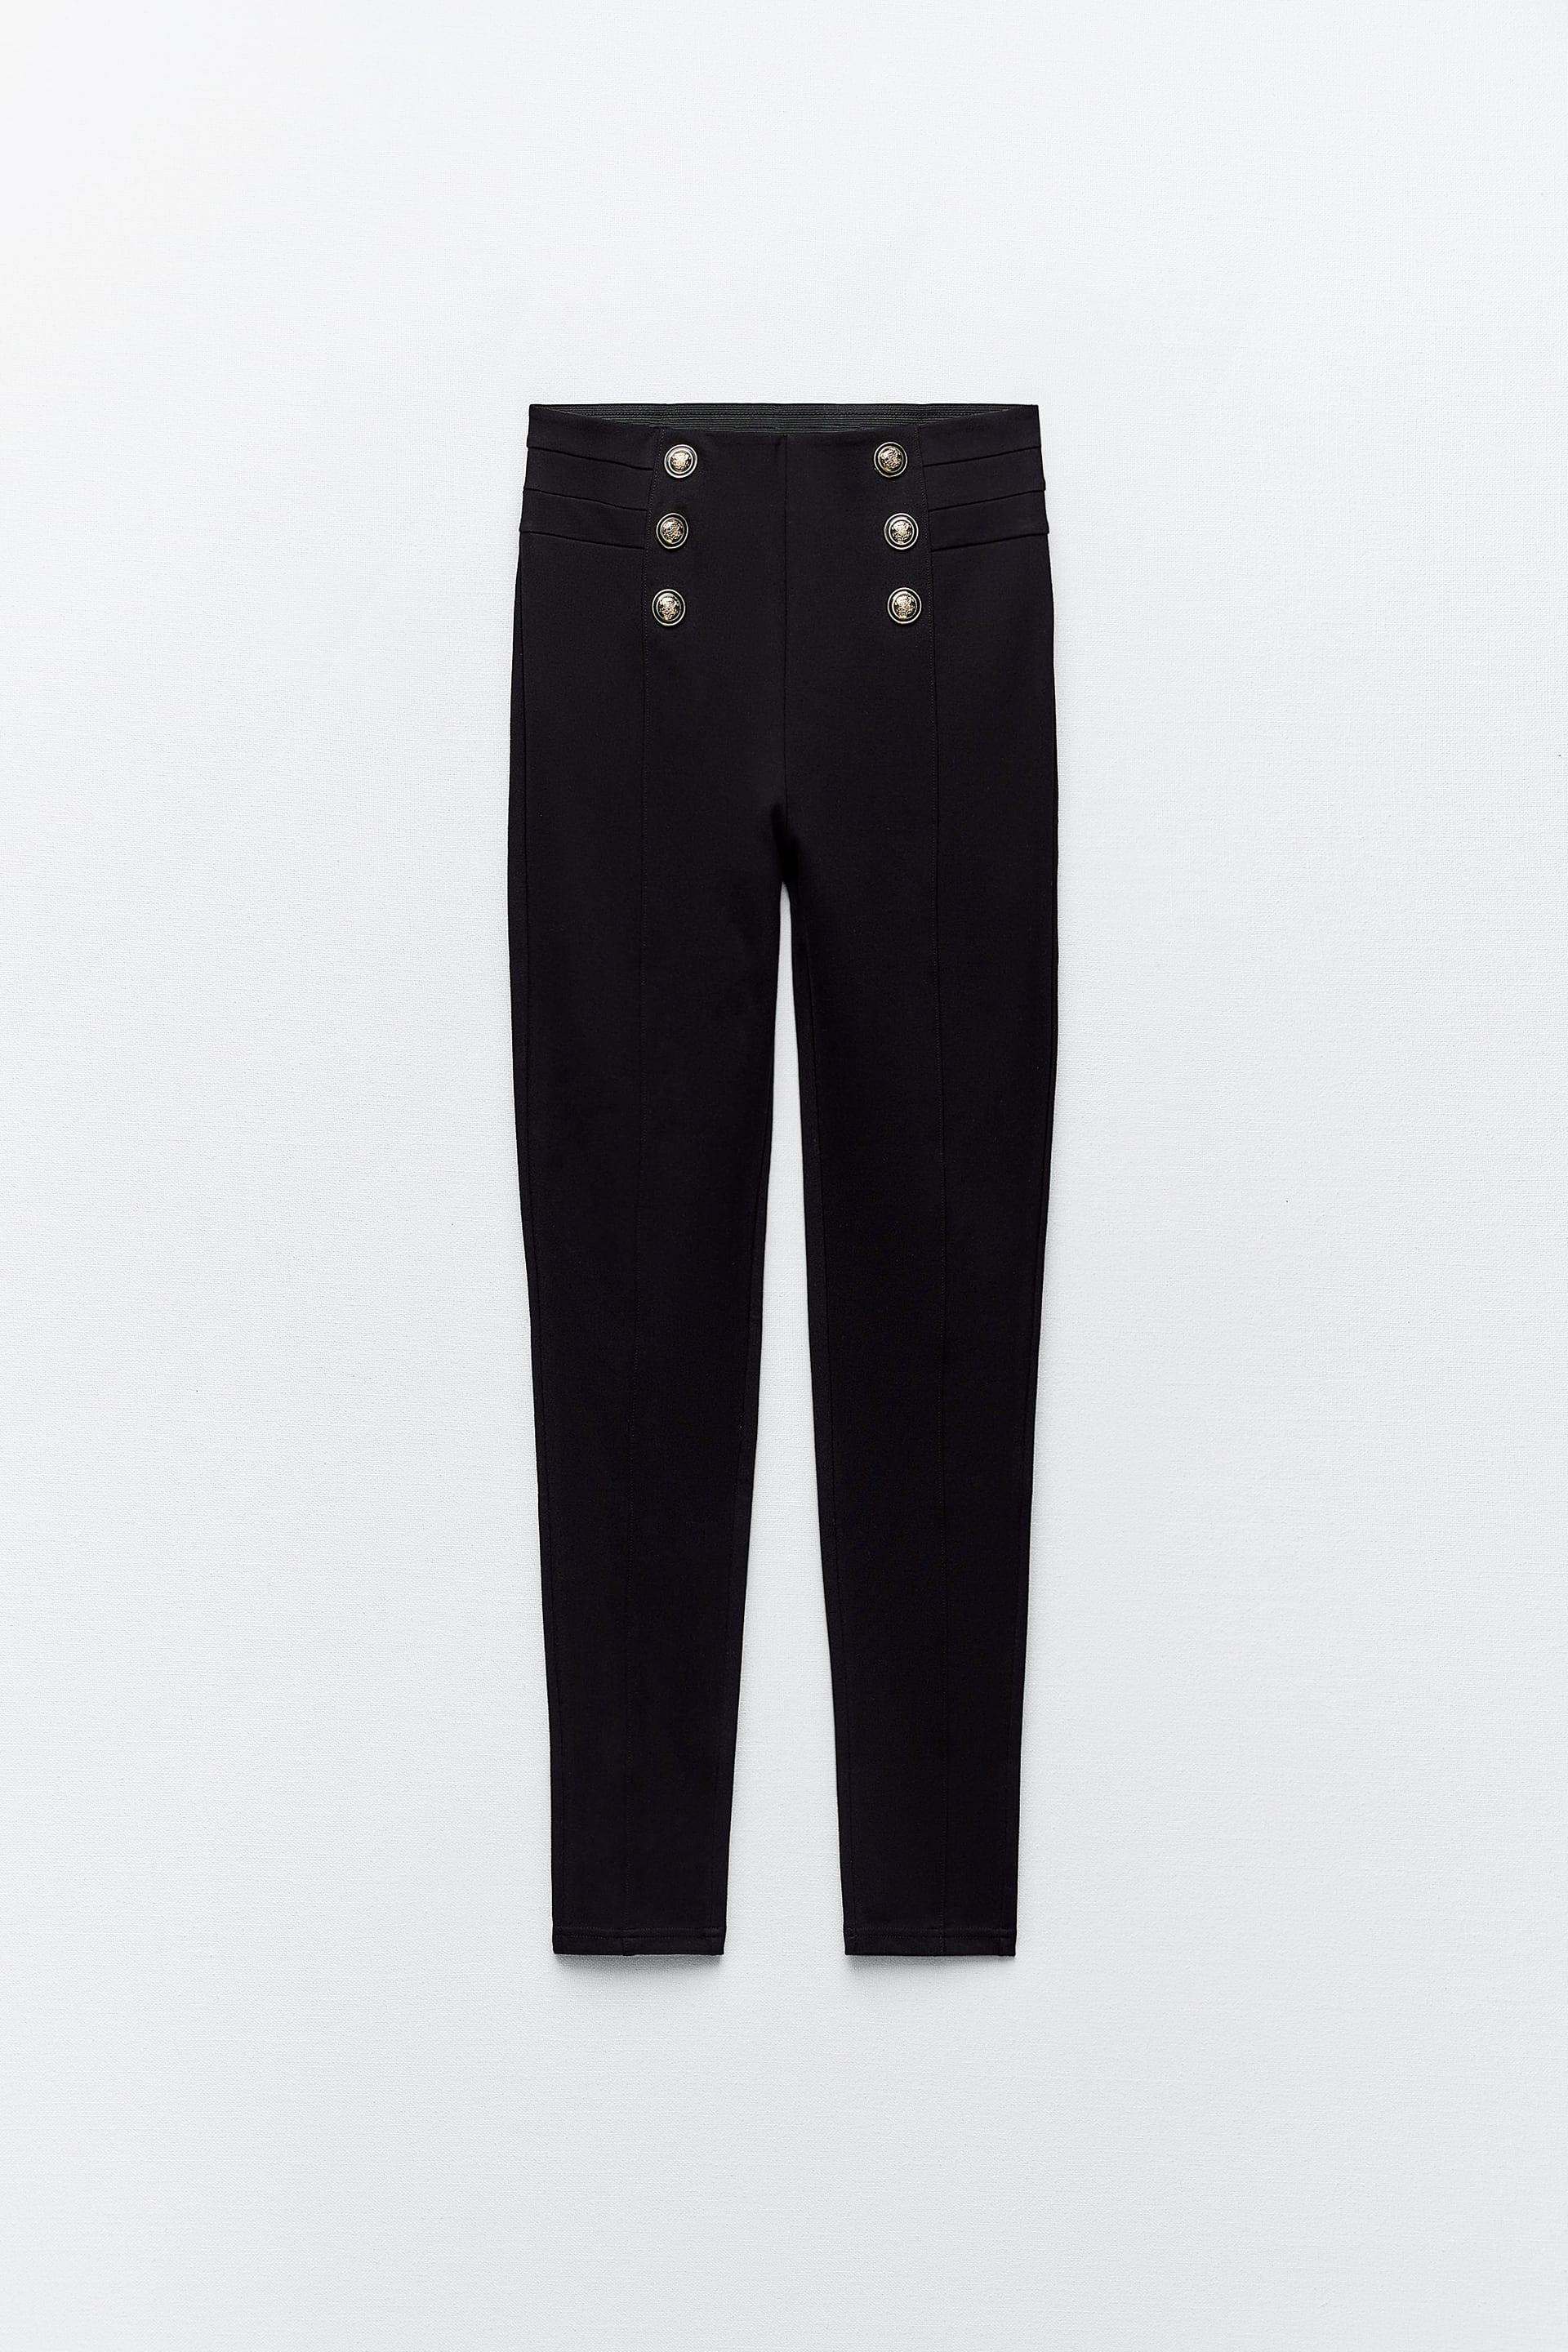 Zara polyester leggings, rich brown, L (NWT) – Shop on Carroll Online